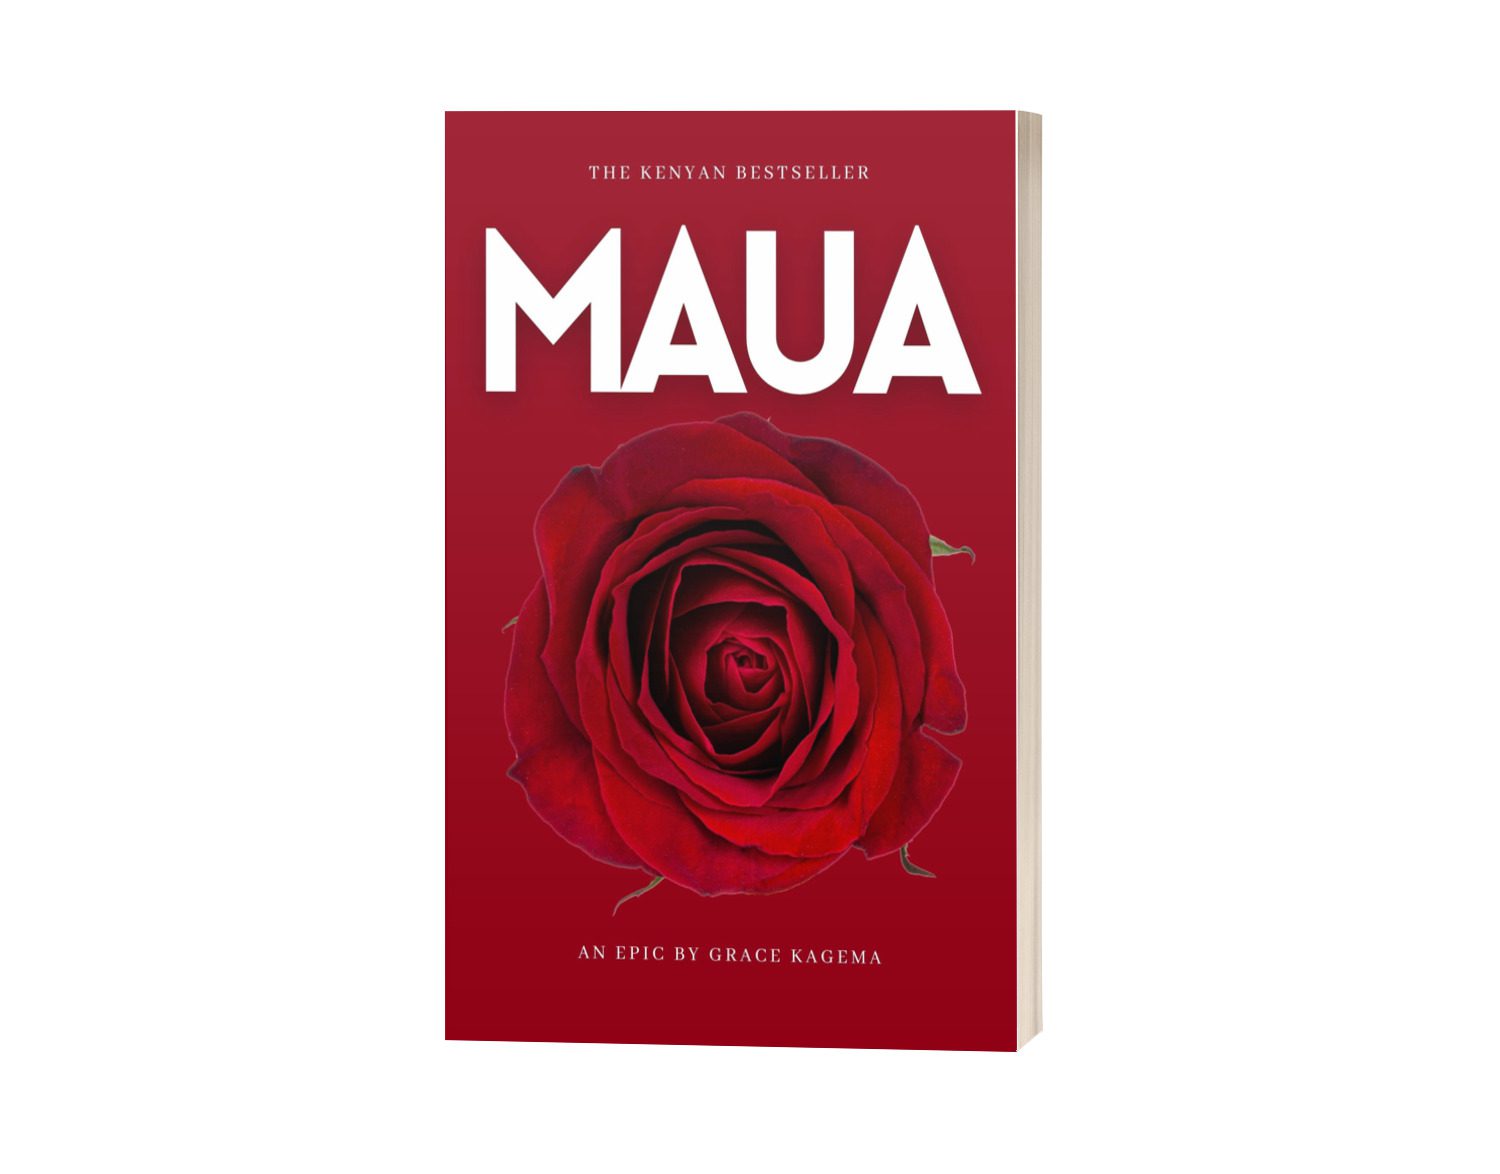 MAUA the novel, an English Epic Read